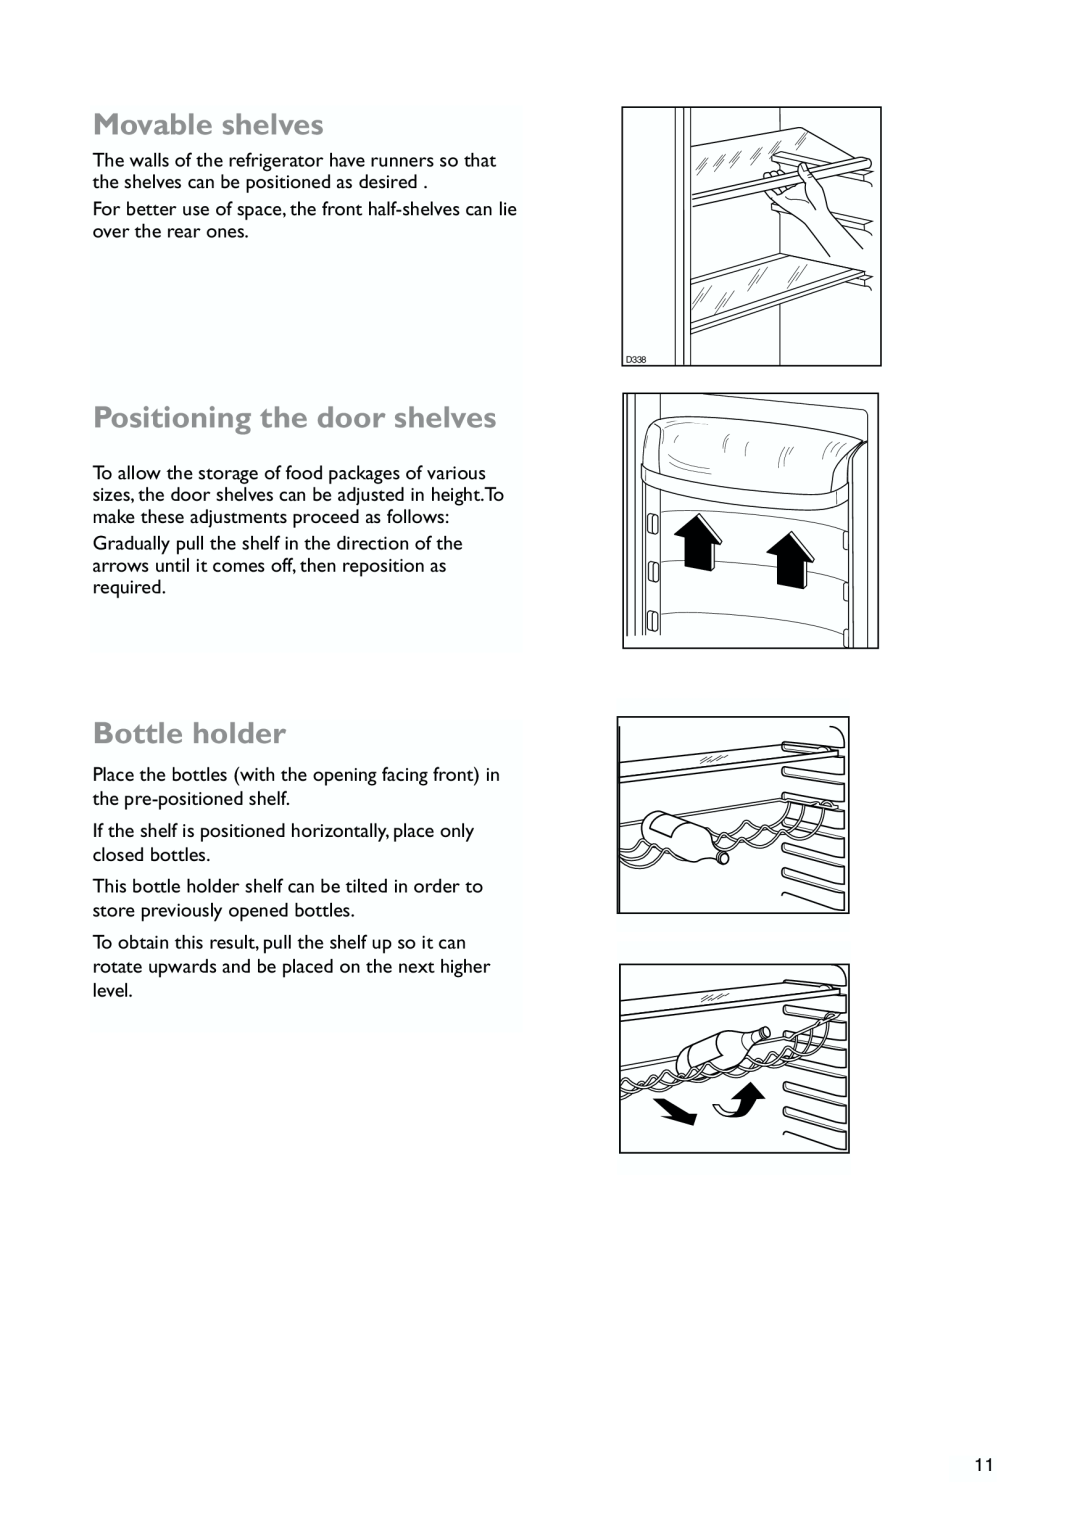 John Lewis JLLFW1809 instruction manual Movable shelves, Positioning the door shelves, Bottle holder, D338 